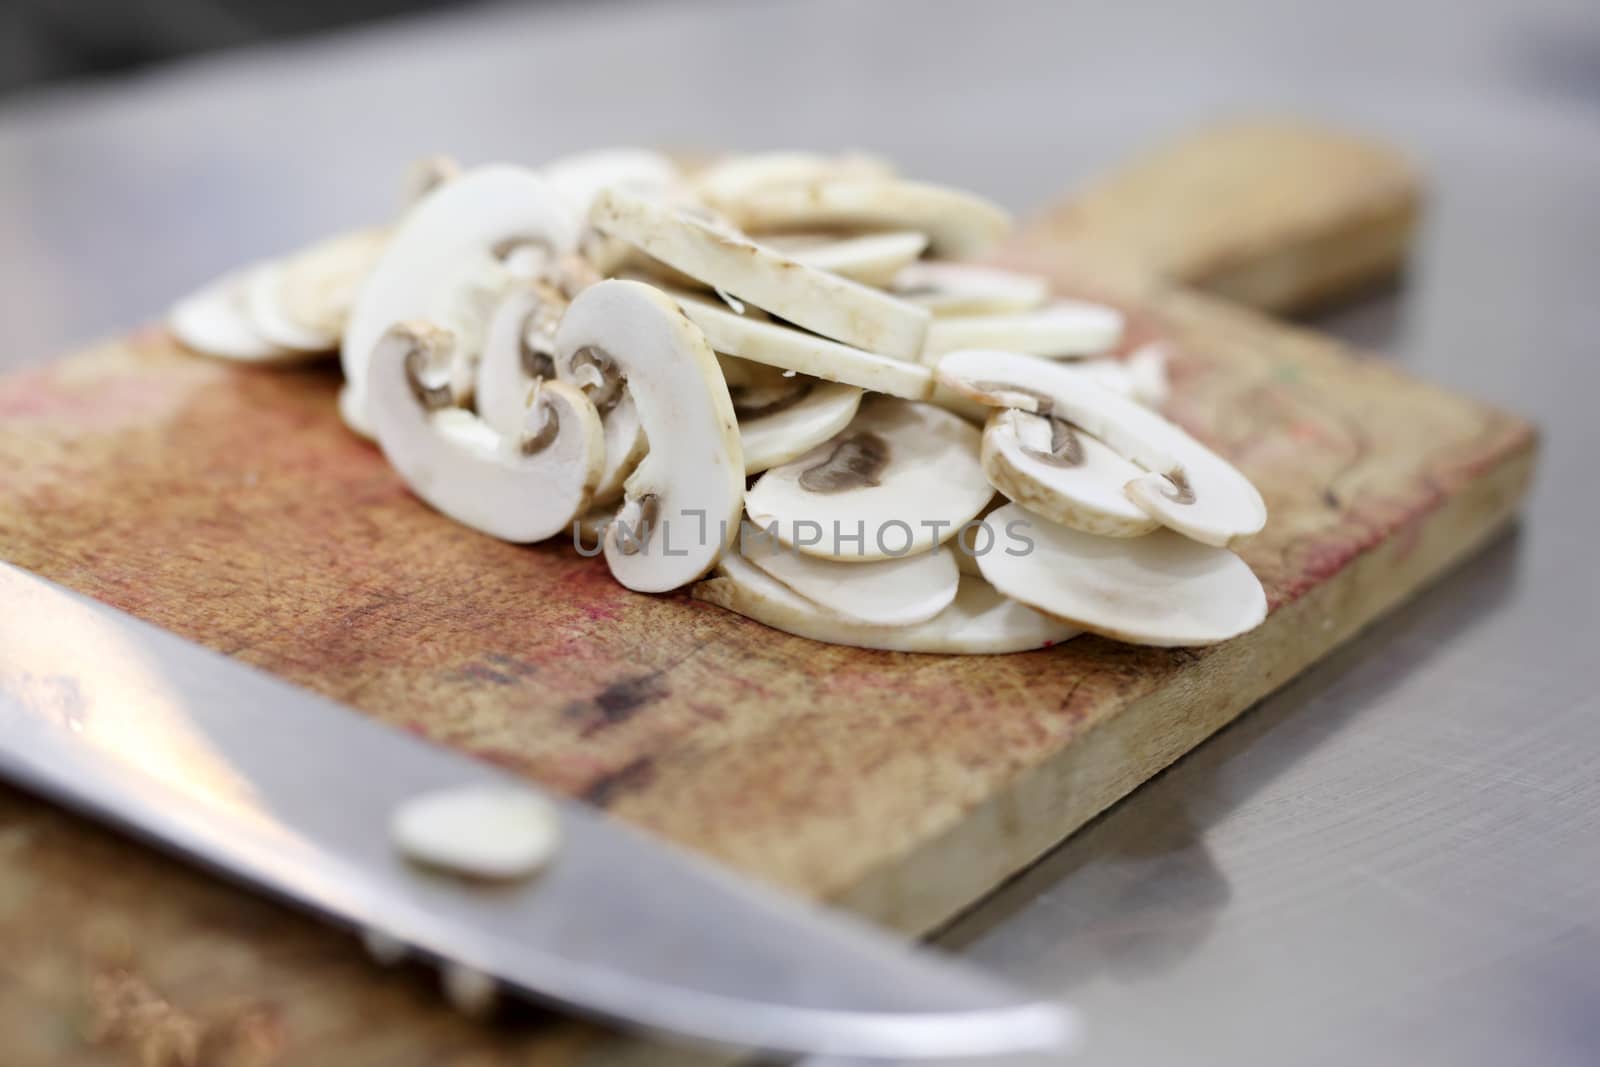 Champignon mushroom cutted by shamtor